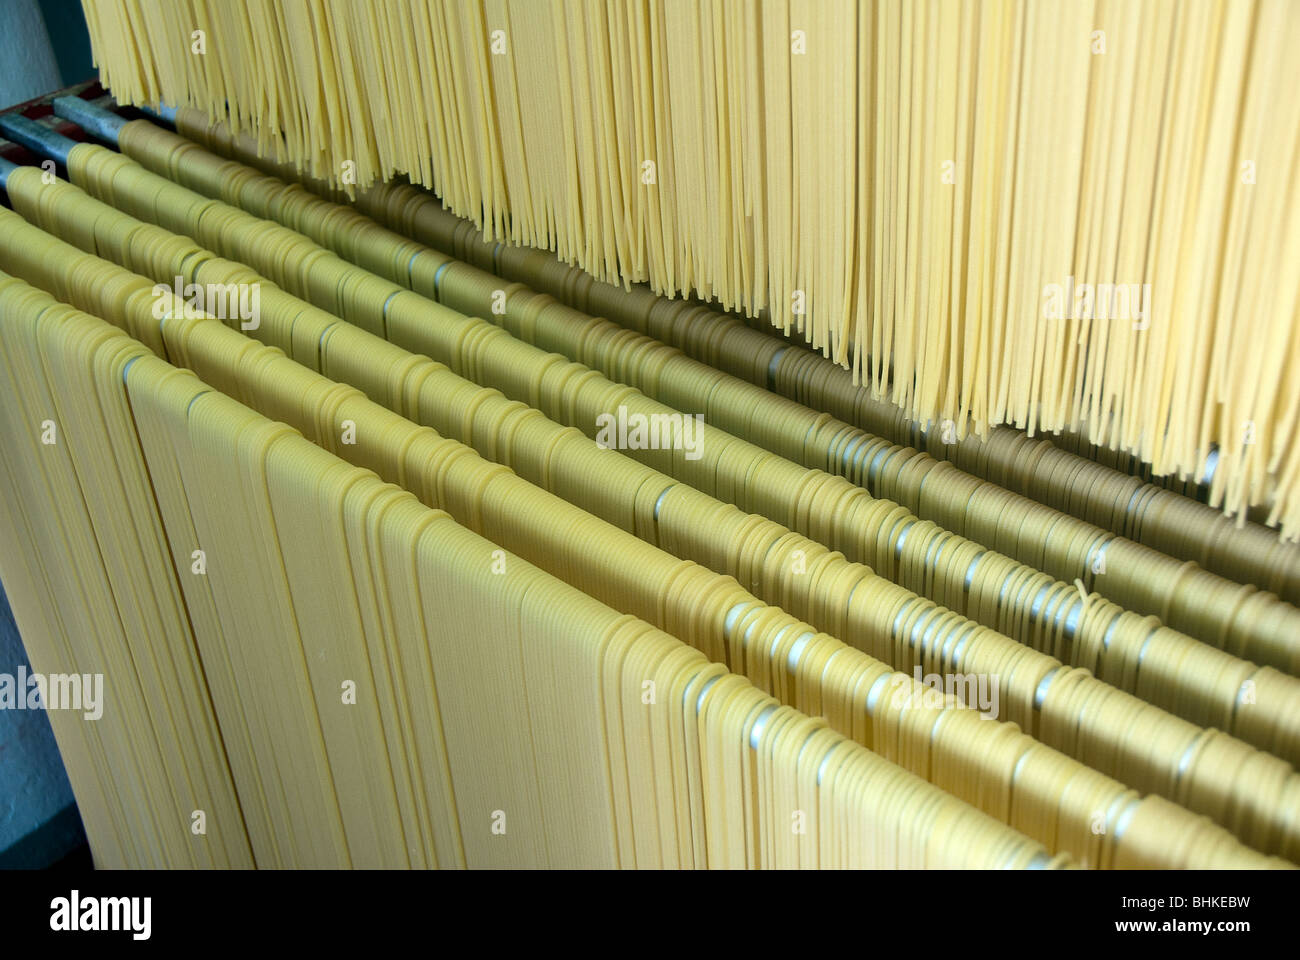 Family owned and run pasta factory in Lari, Italy: Martelli Famiglia di pastai Stock Photo